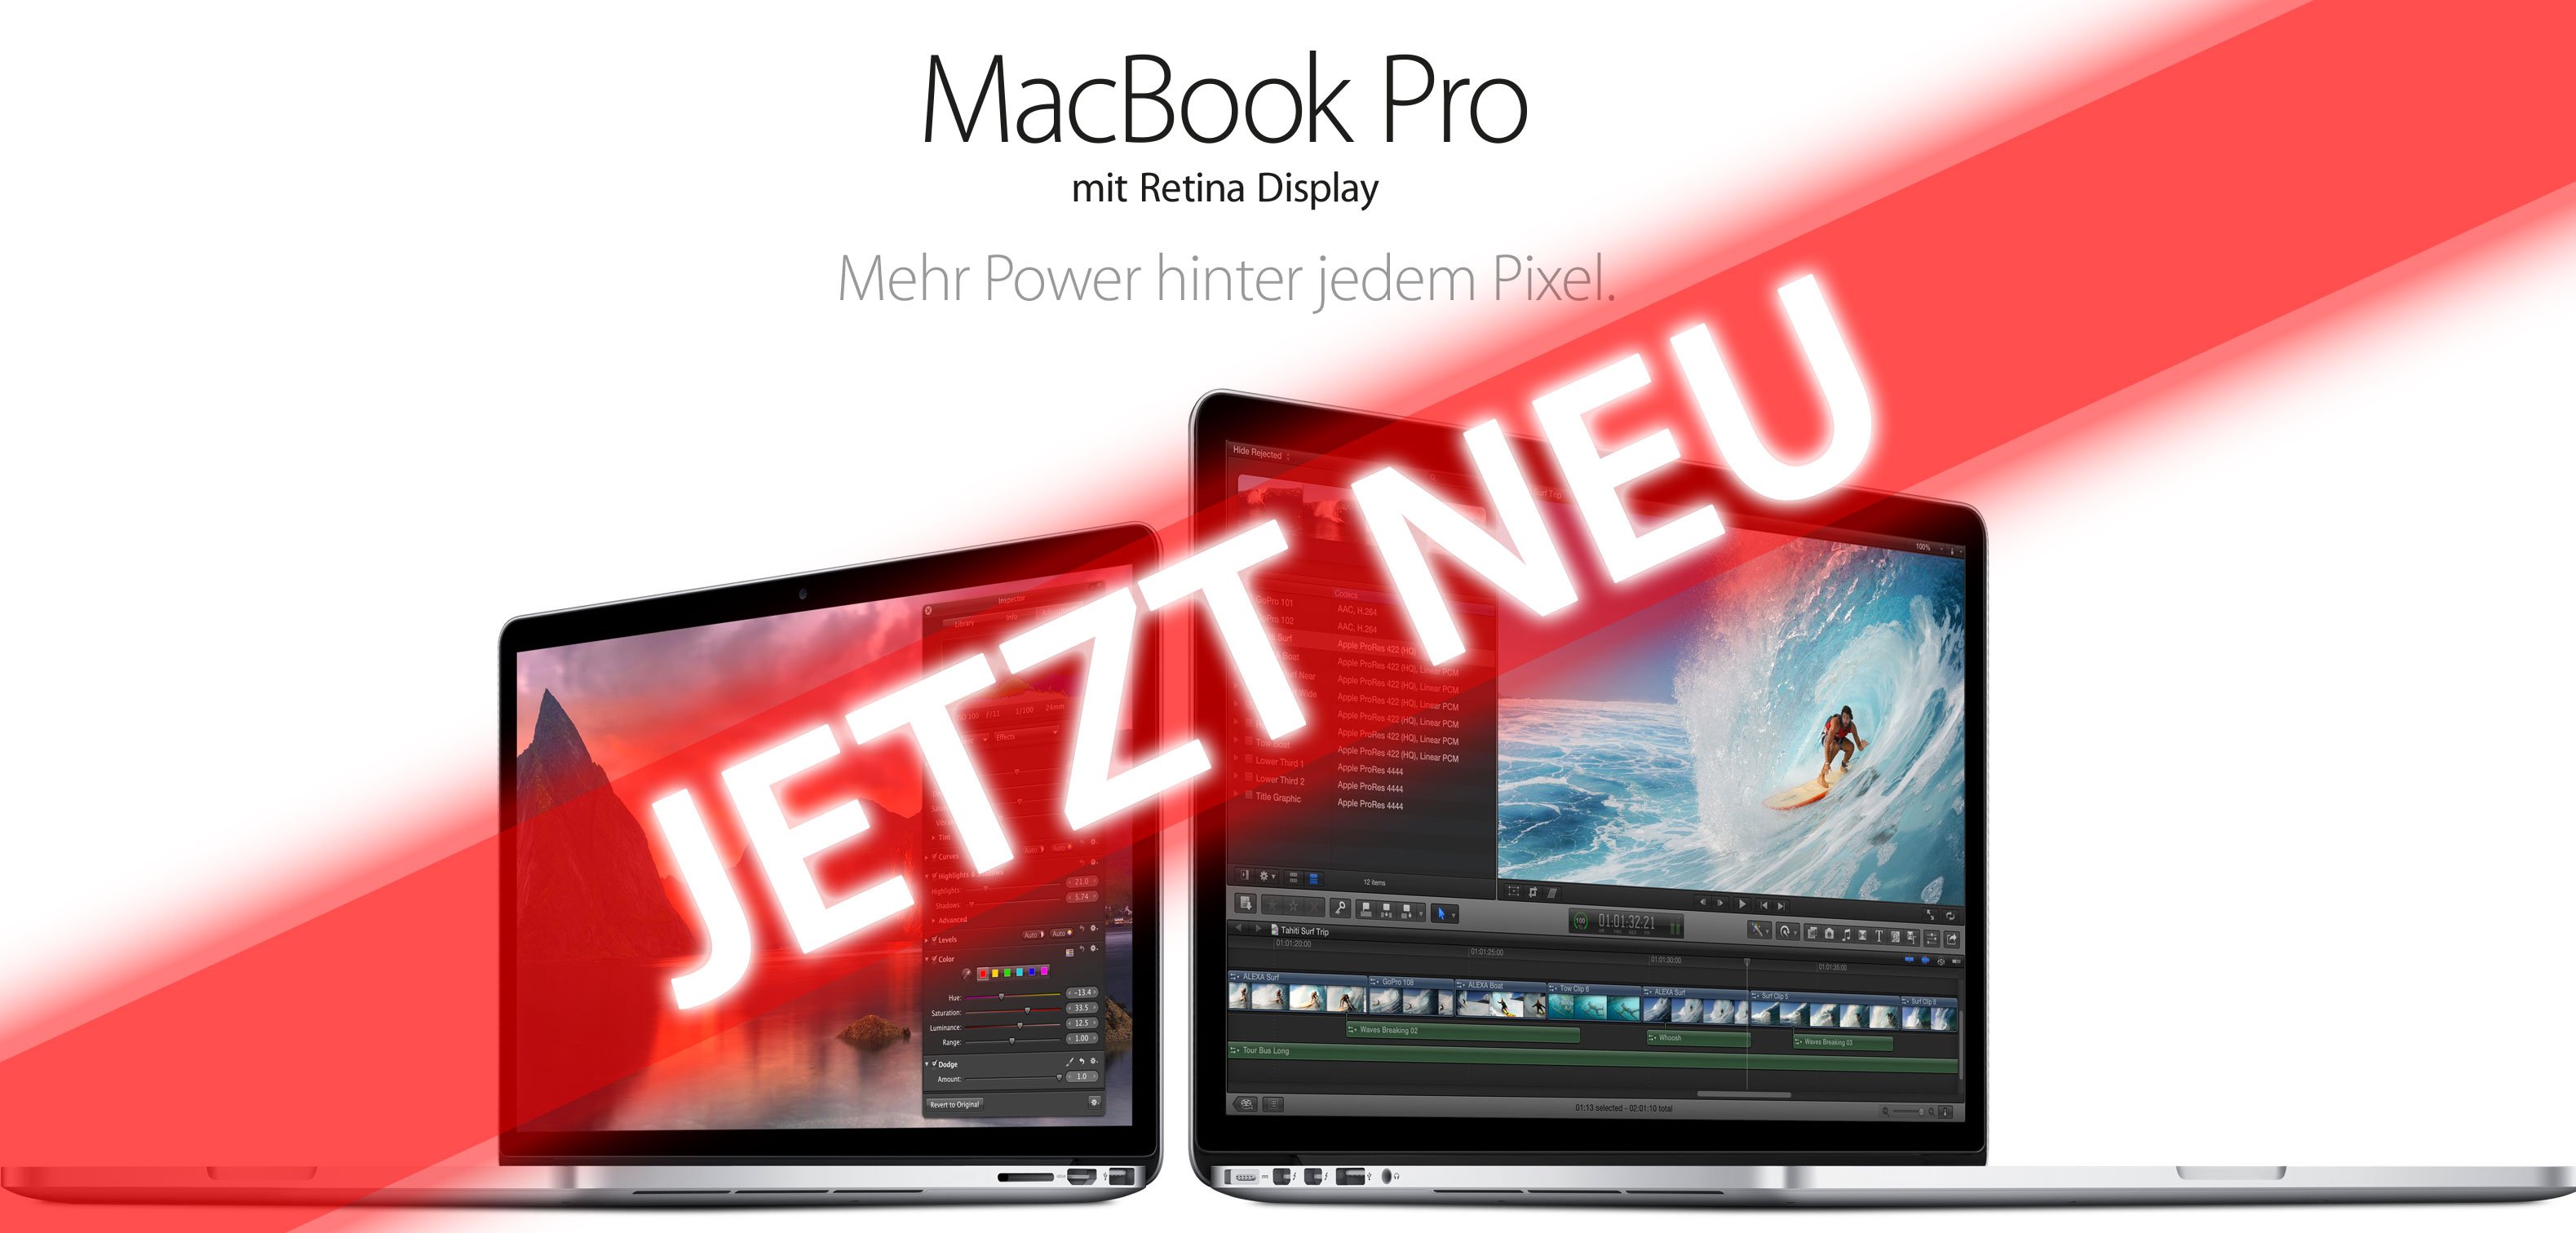 MacBook Pro 2014 mit Retina Display jetzt im Apple Online Store 2